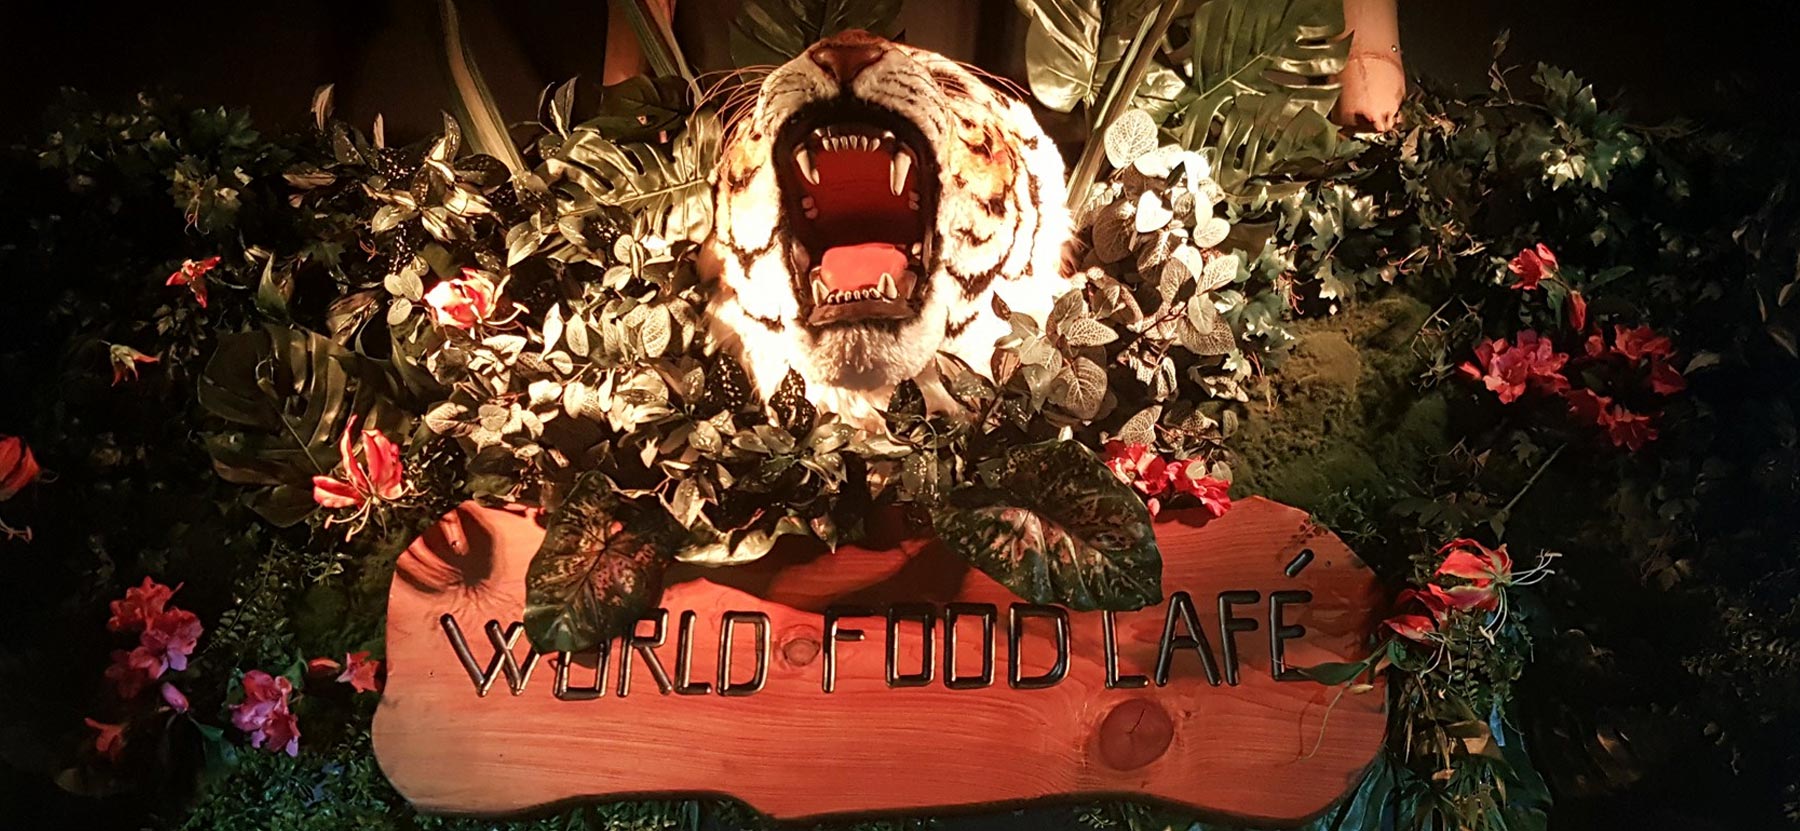 World Food Café